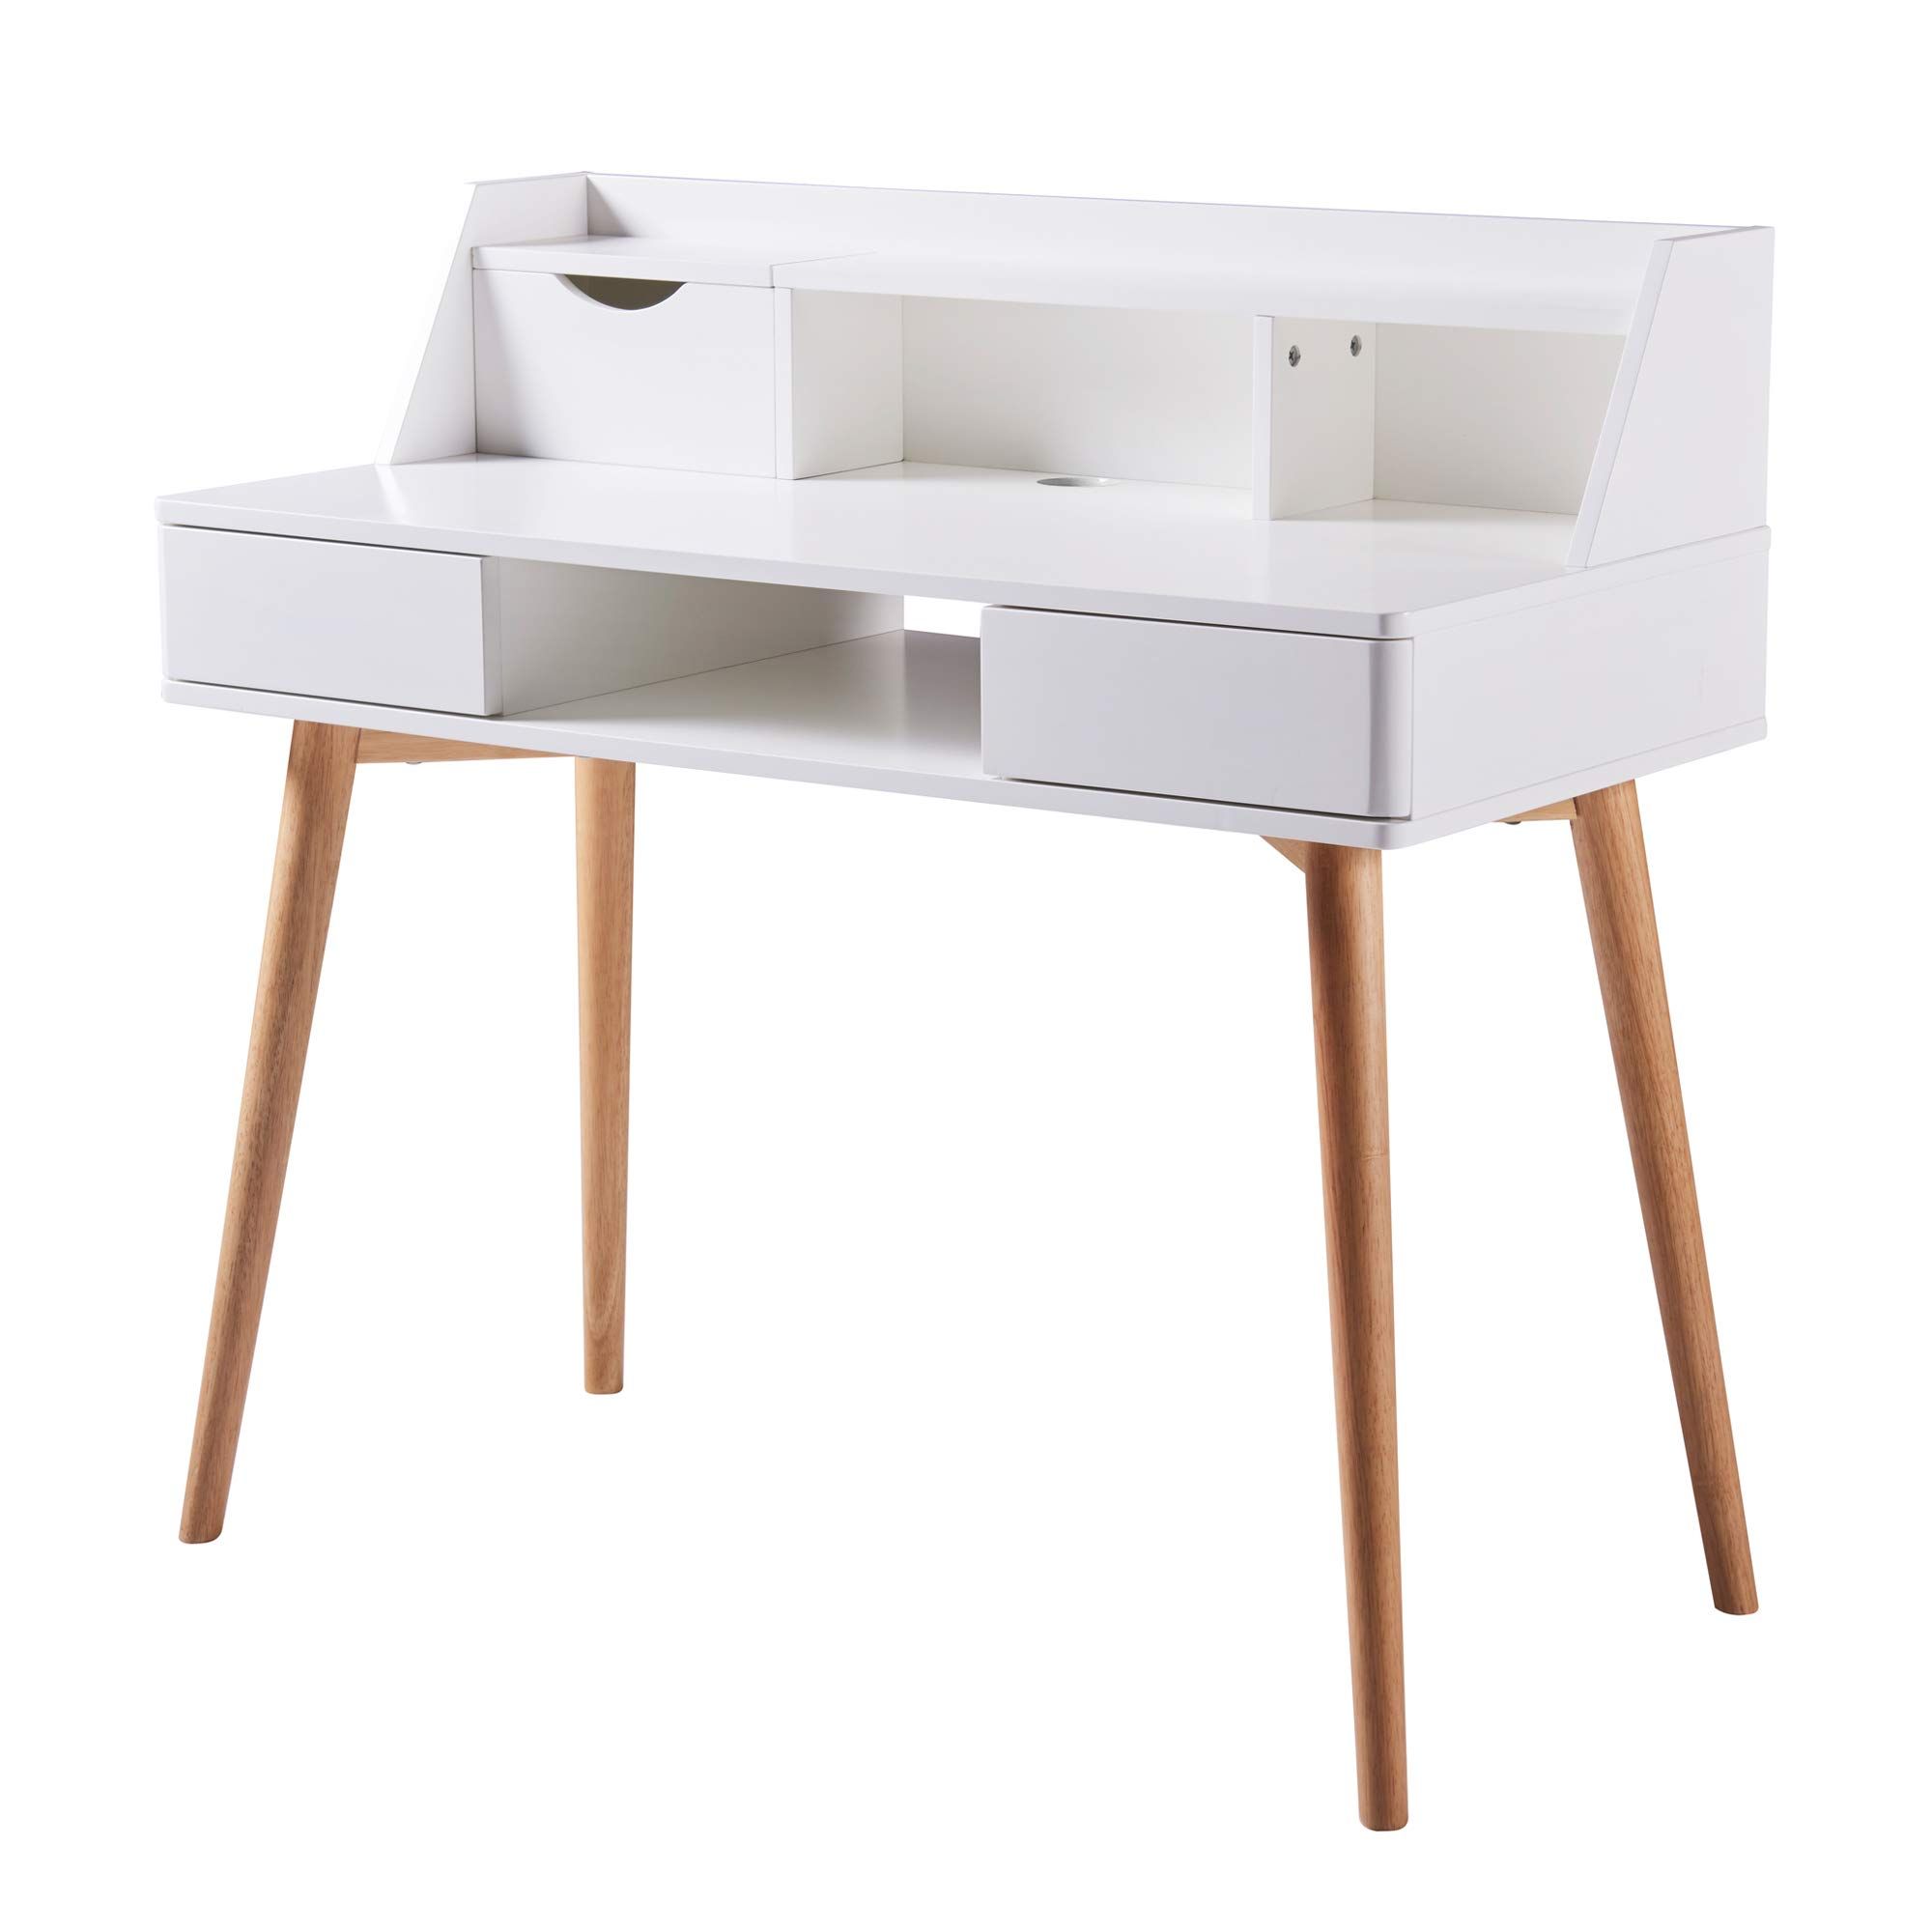 Versanora Creativo White Work Study Table Desk With Storage Drawer Shelf Natural Finish For Livin... | Amazon (US)